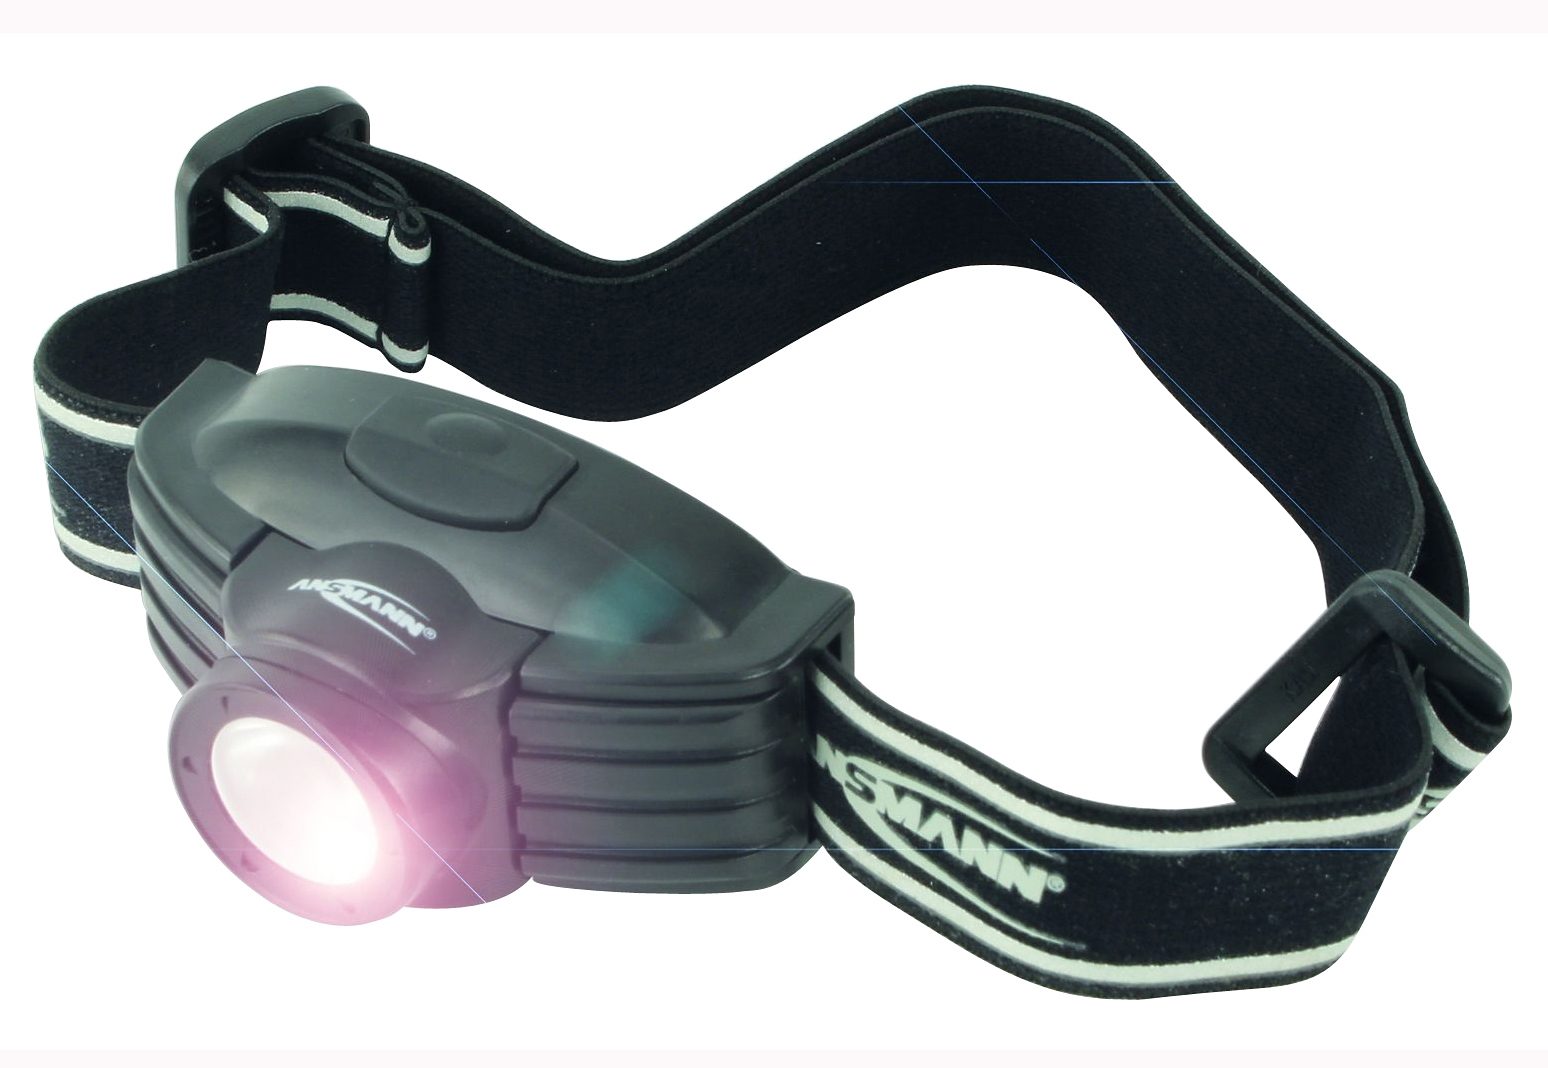 stirnlampe headlight future inkl batterien ansmann